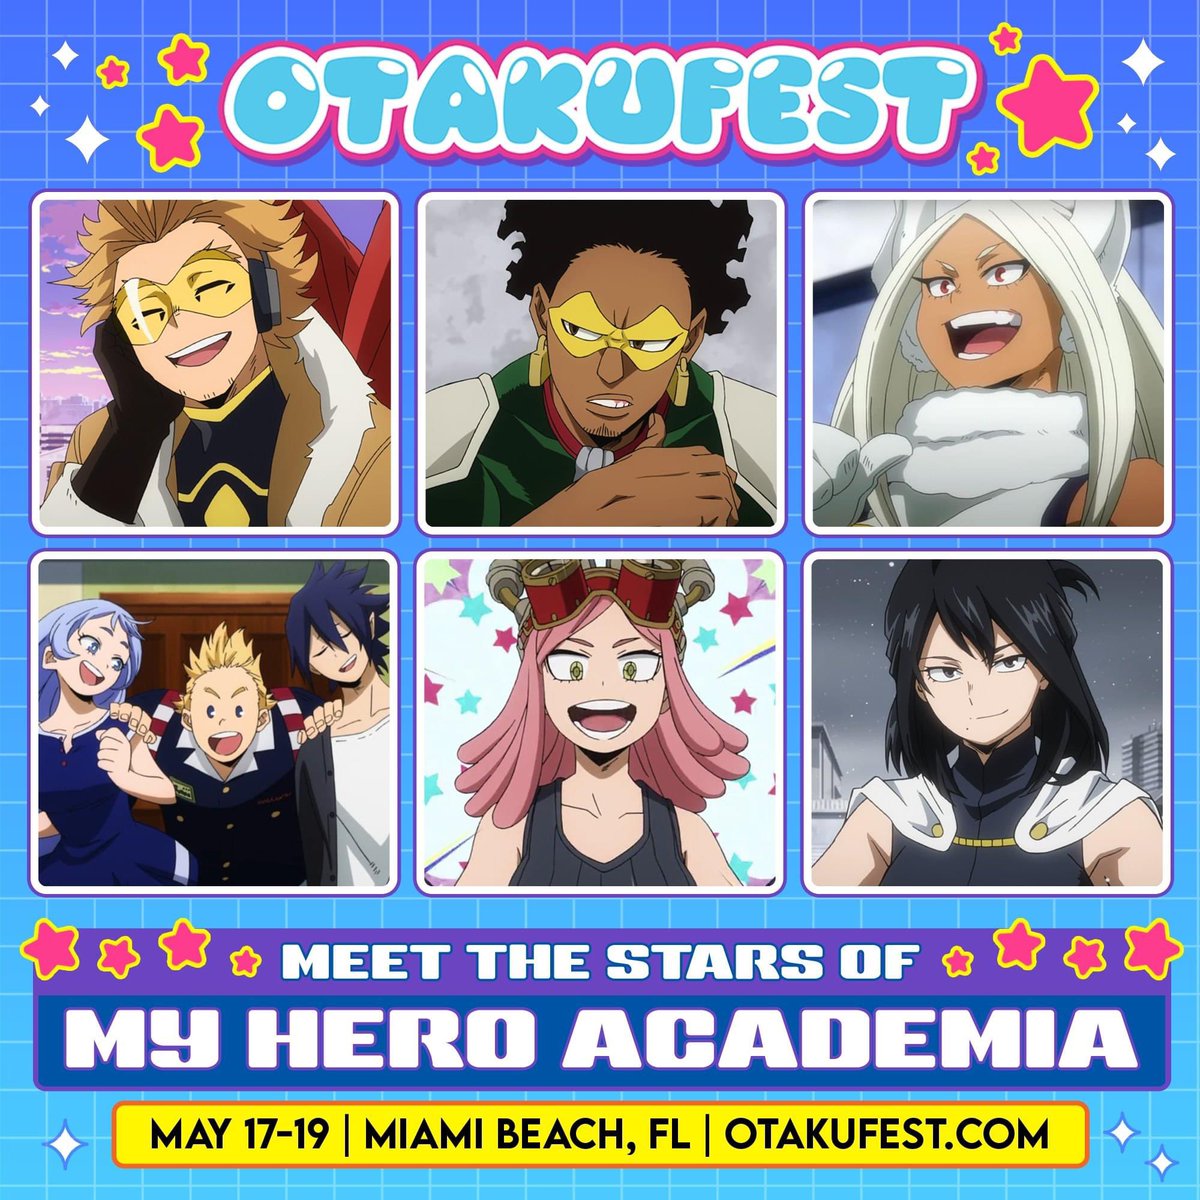 Meet the stars of #MyHeroAcadamia at #OtakuFest in Miami Beach, FL! 🎟️Tickets: otakufest.com/tickets 🤩Guests: otakufest.com/guests 🏨Hotels: otakufest.com/hotel #anime #cosplay #gaming - @childishgamzeno @anairis_q @GabeKunda @severelylindsay @AlexisTiptonVA